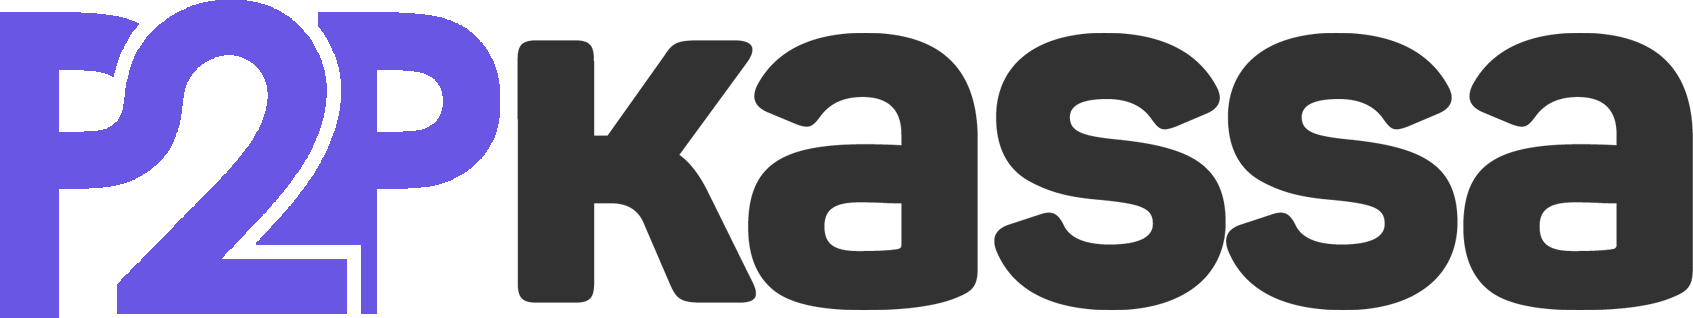 p2pkassa logo